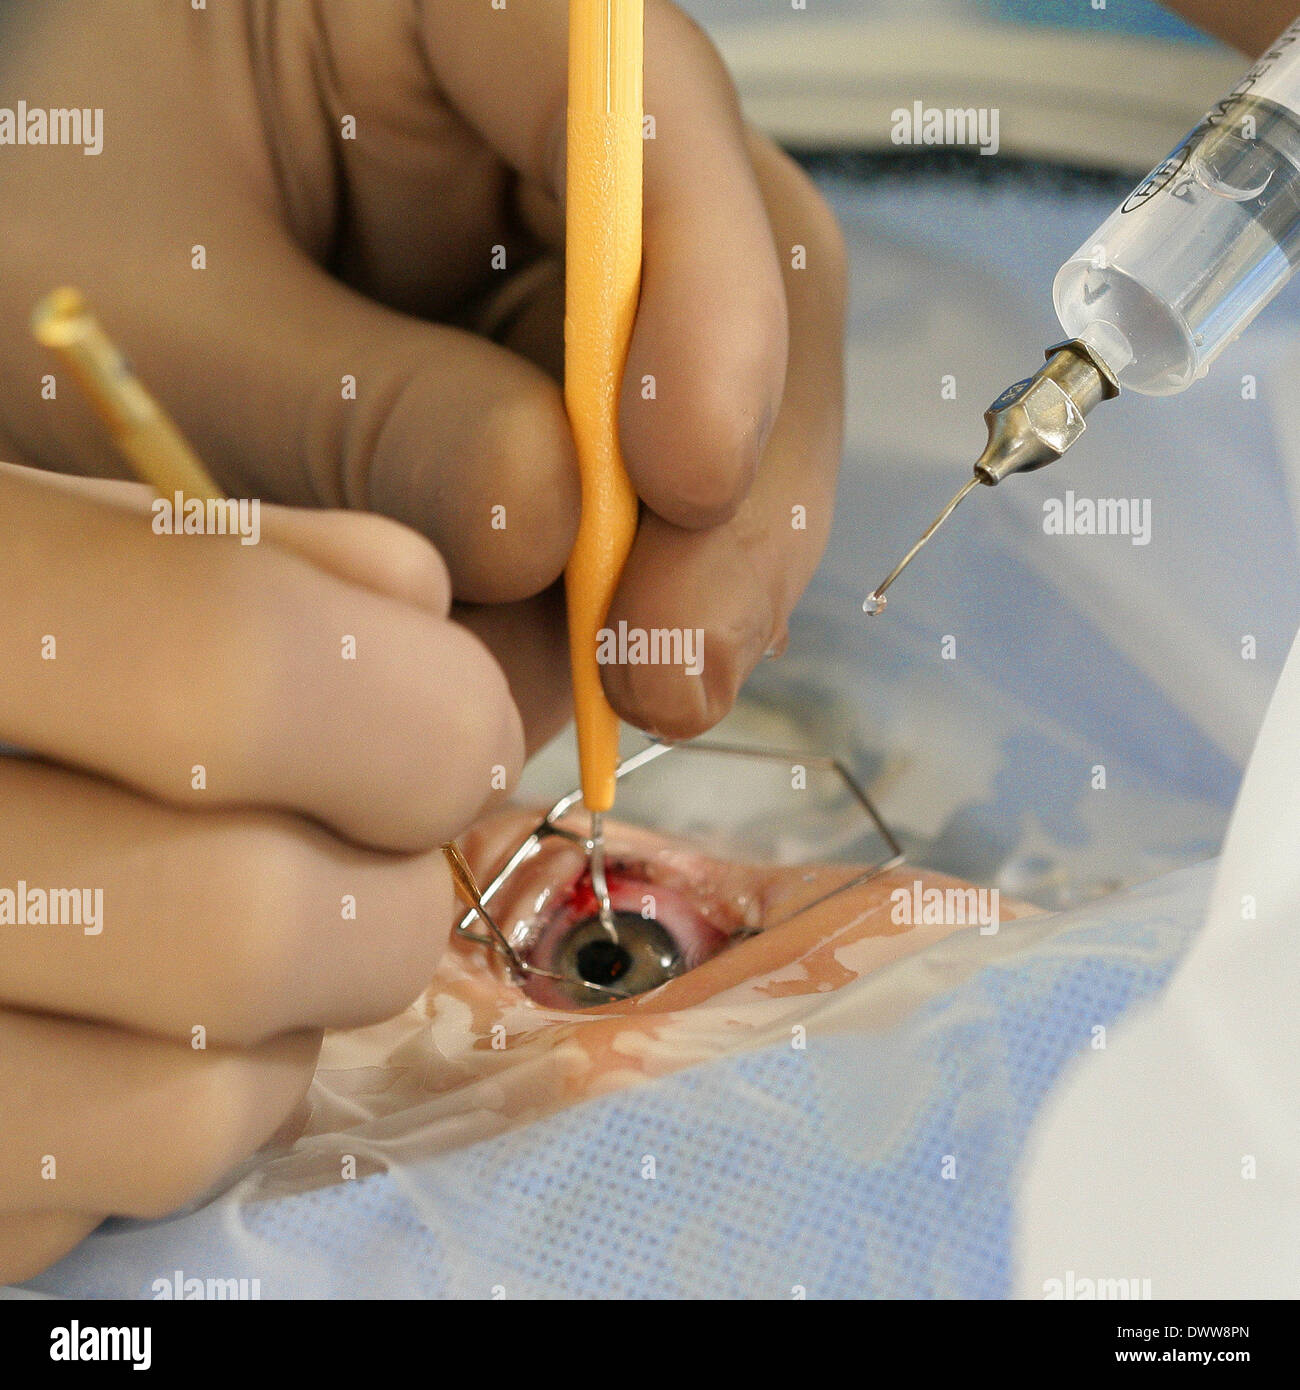 Surgery strabismus Stock Photo